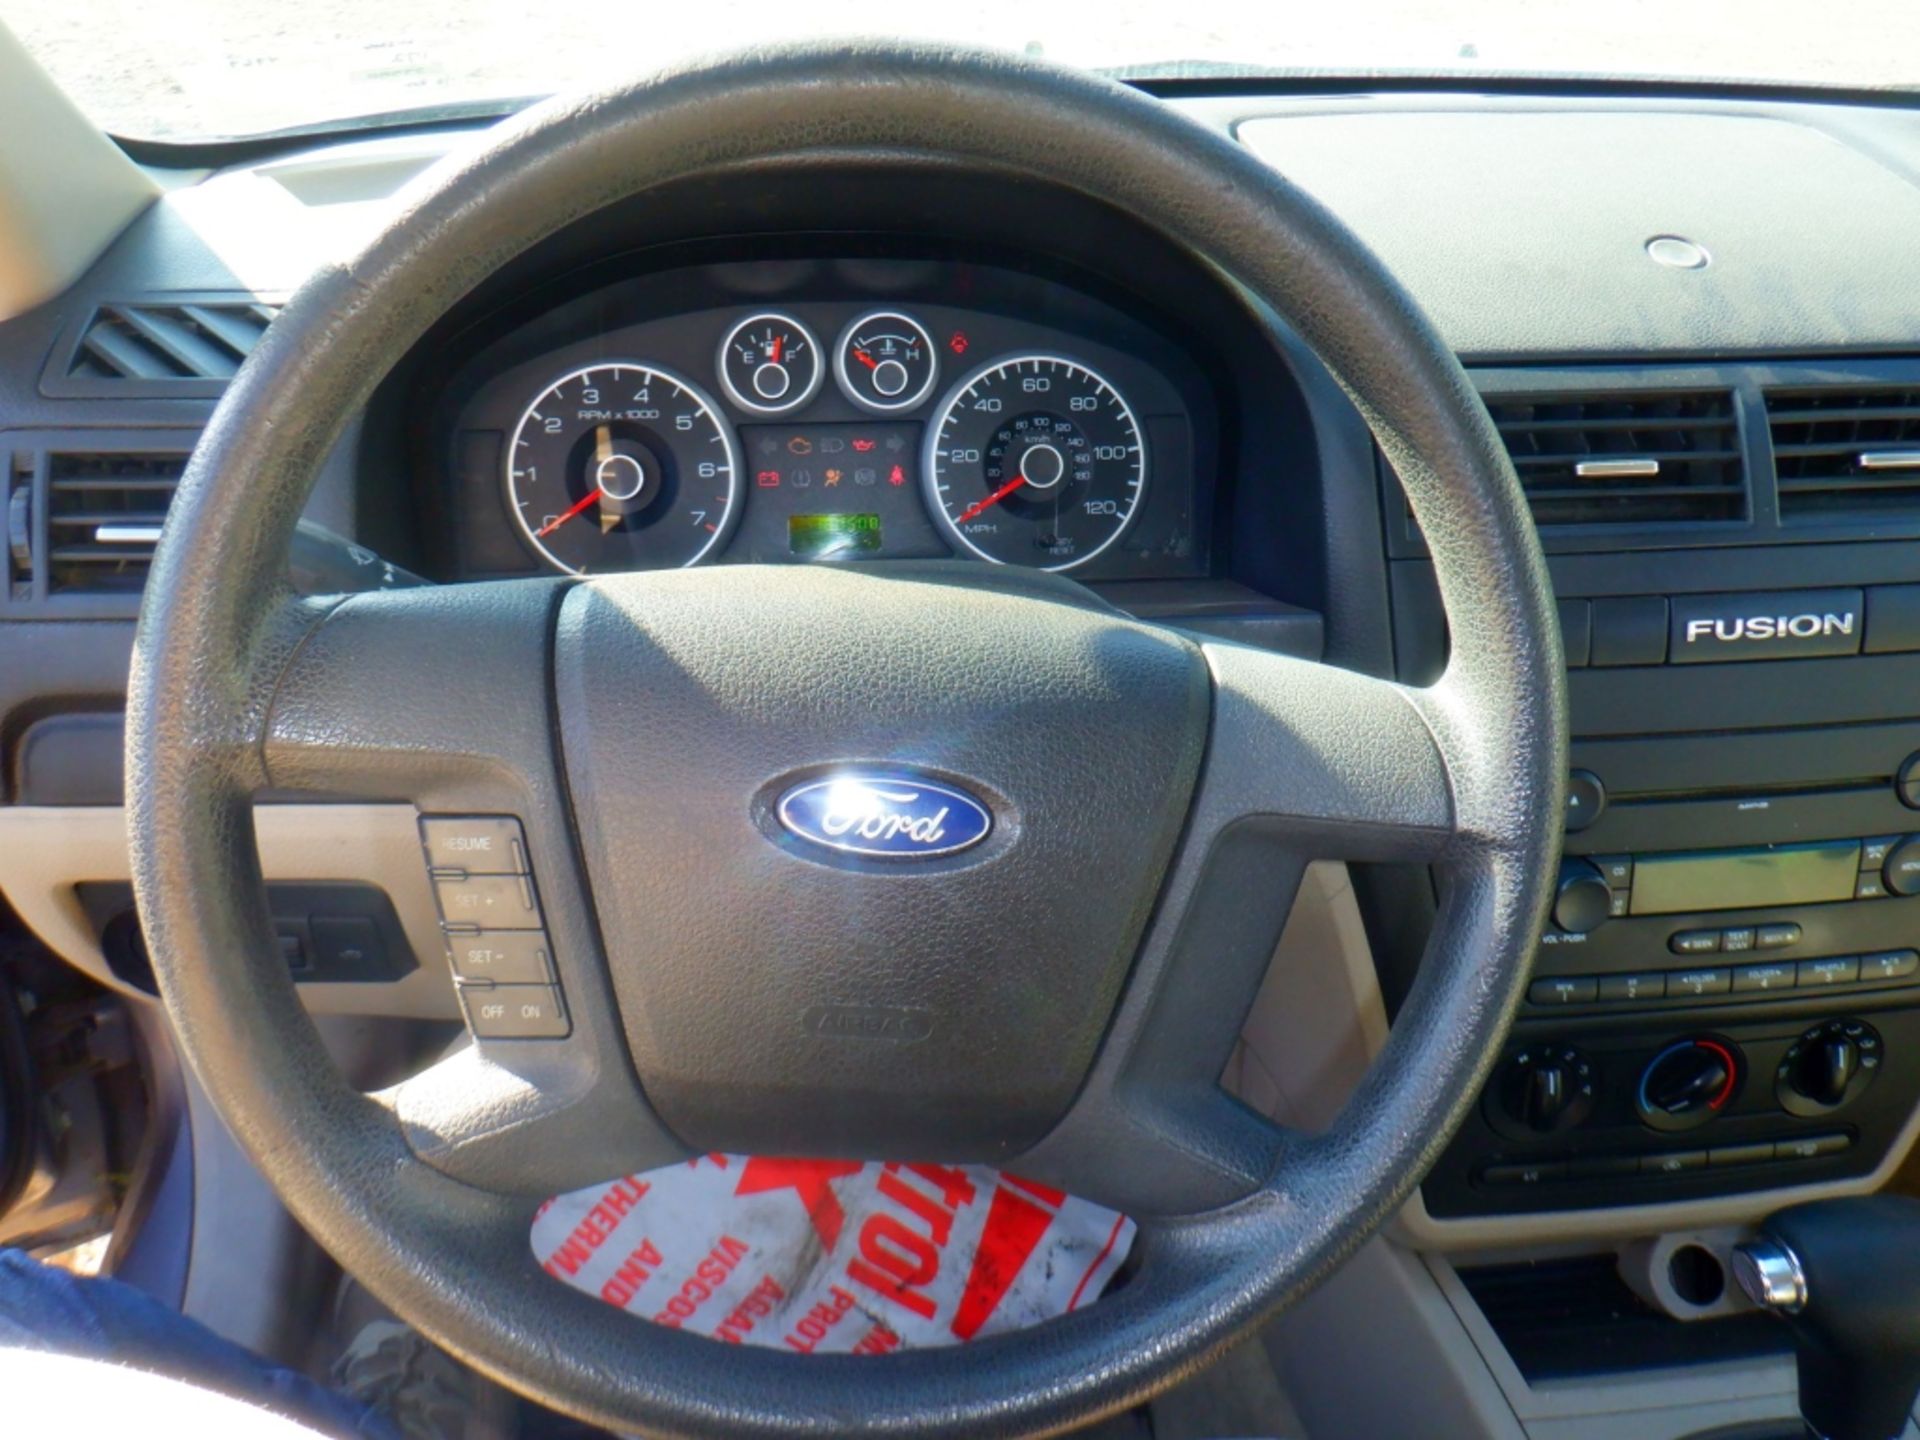 Ford Fusion Sedan, - Image 27 of 34